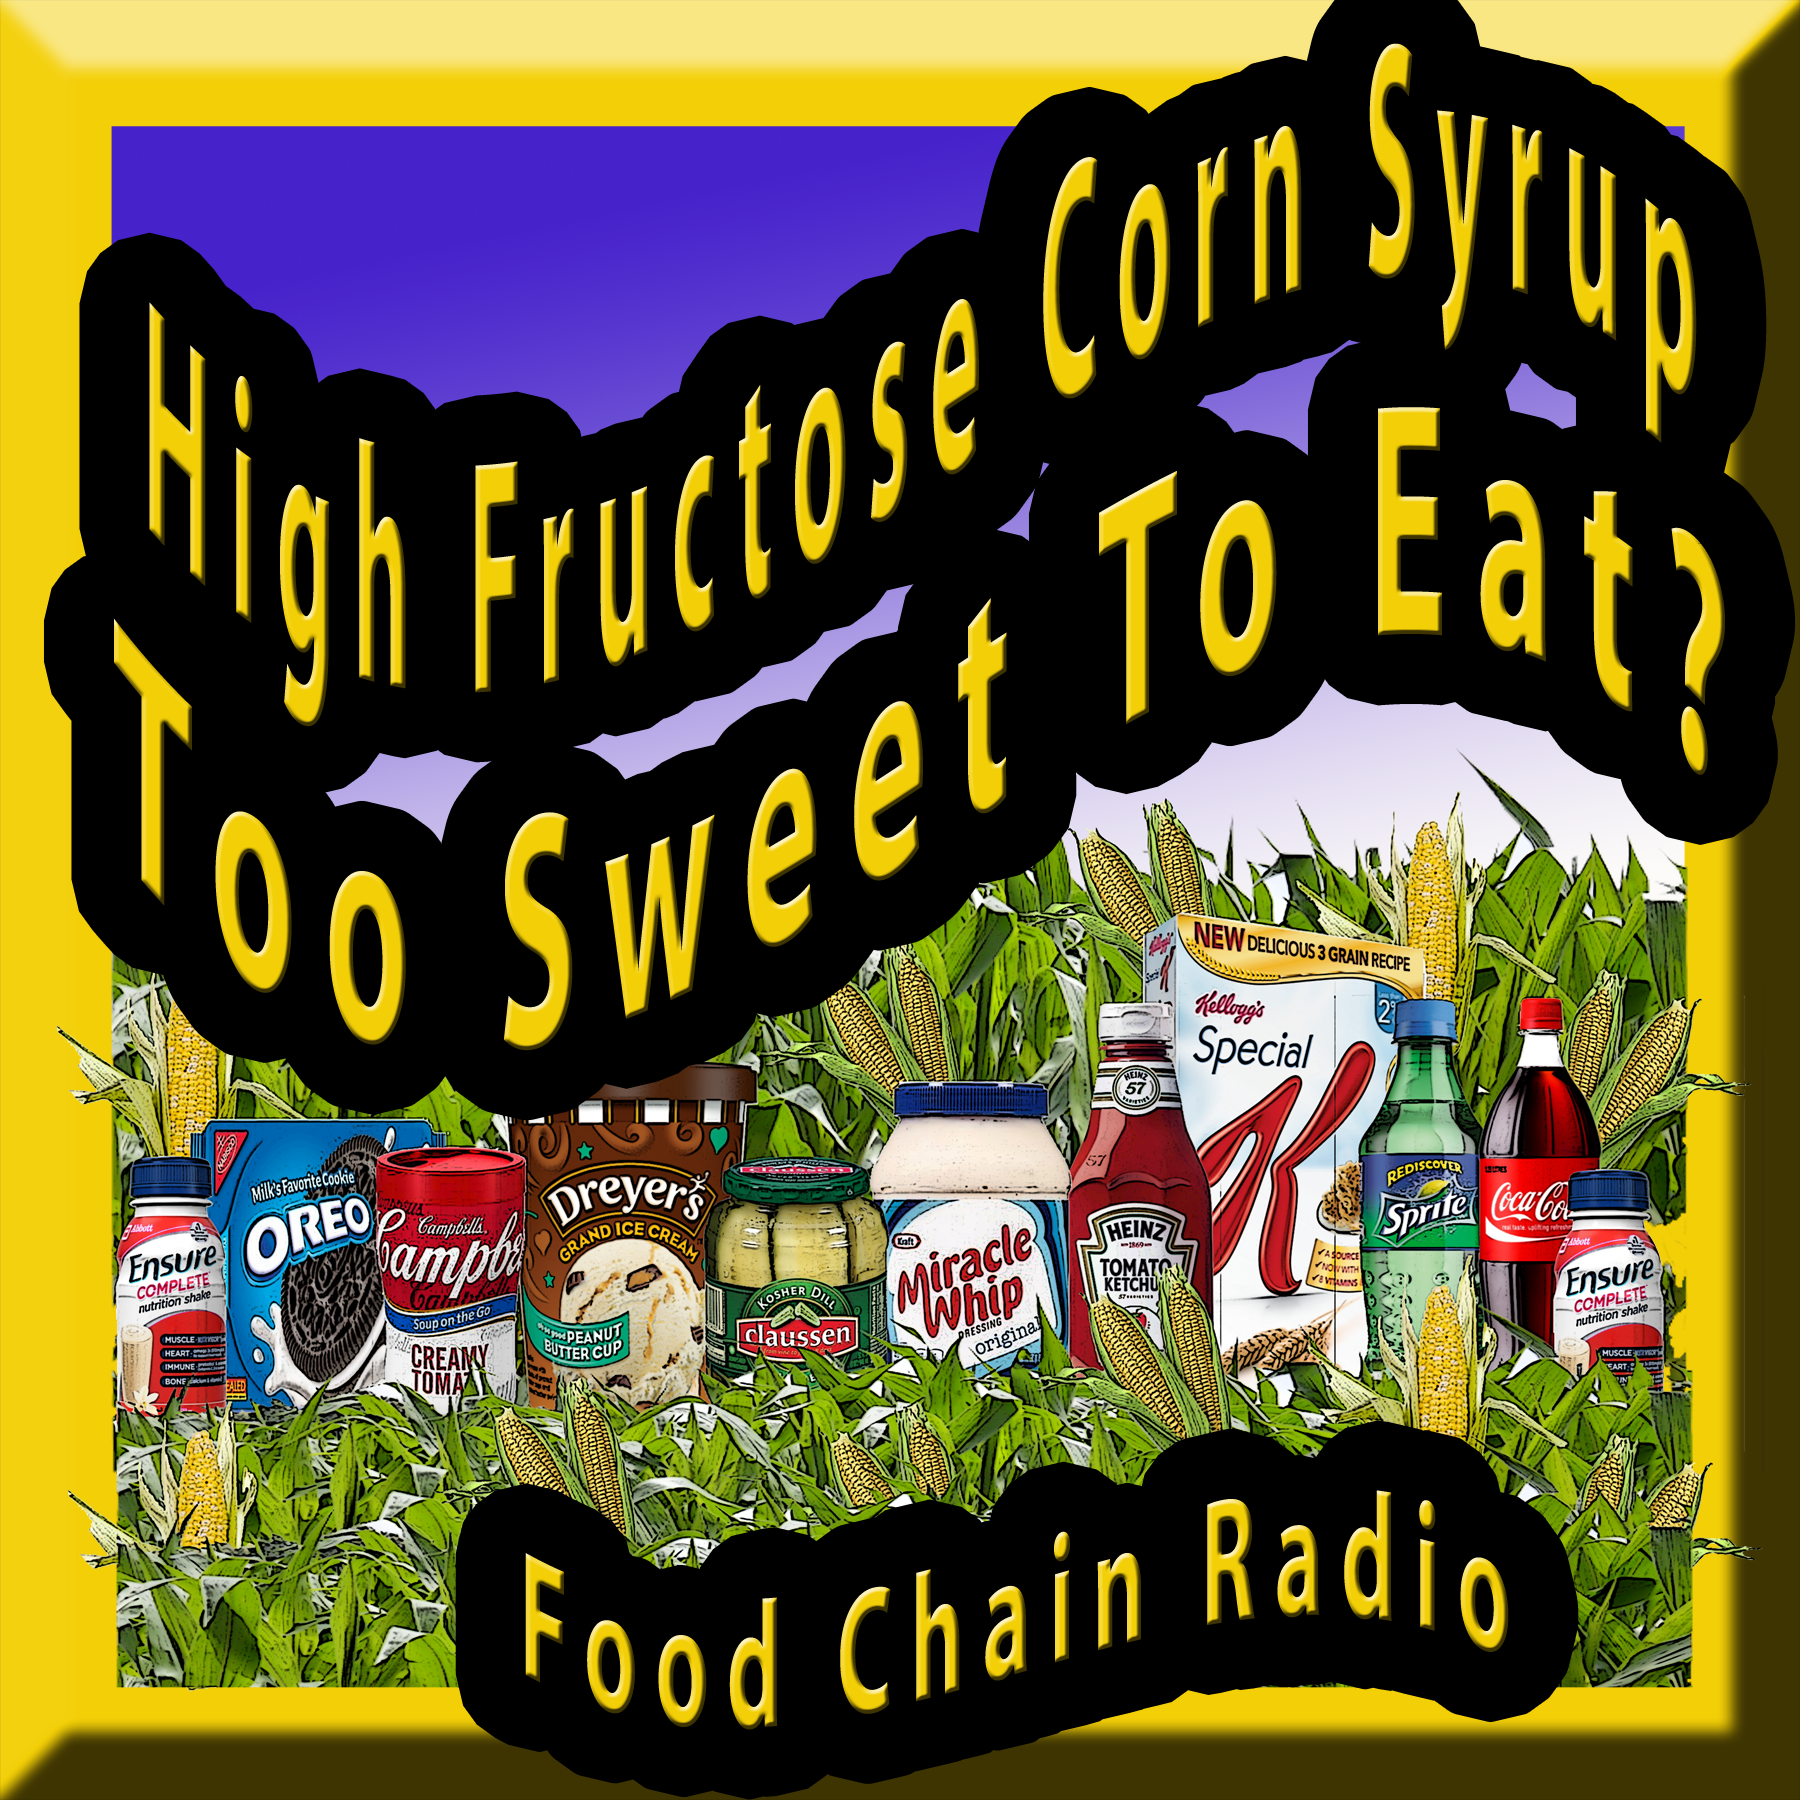 Michael Olson Food Chain Radio - High Fructose Corn Syrup (HFCS)High Fructose Corn Syrup (HFCS) -